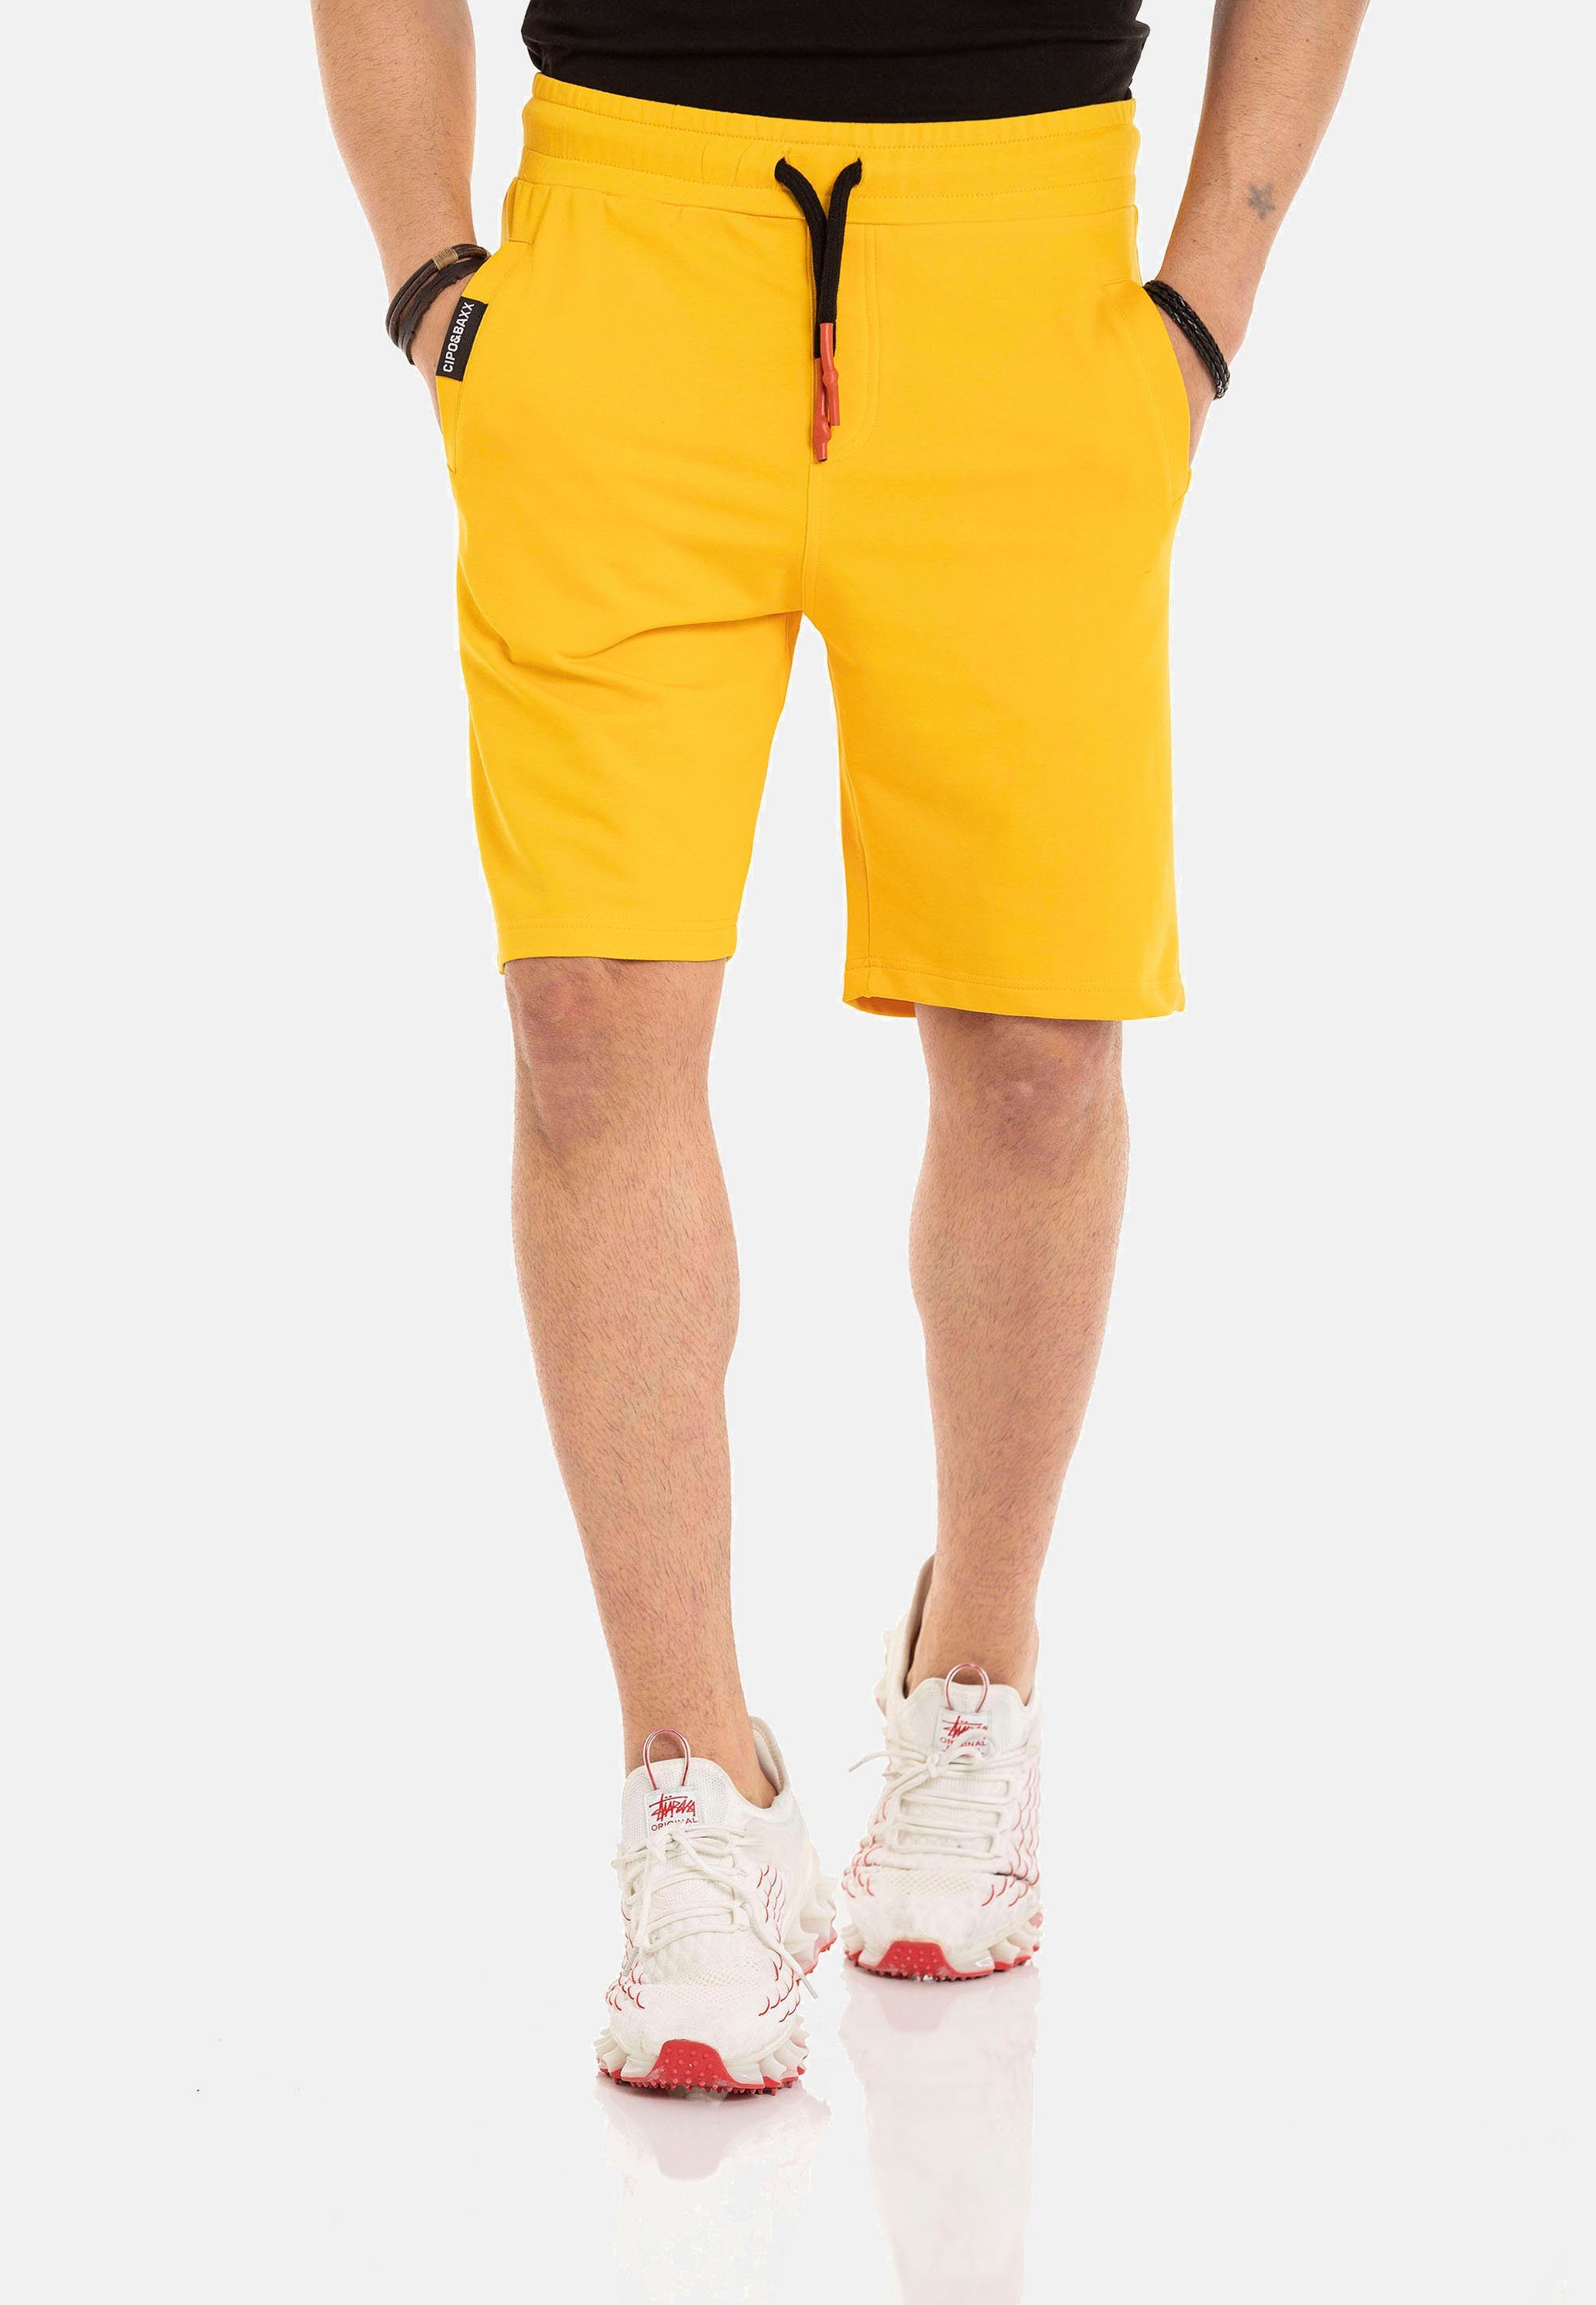 Cipo & Baxx Shorts in sportlichem Look gelb